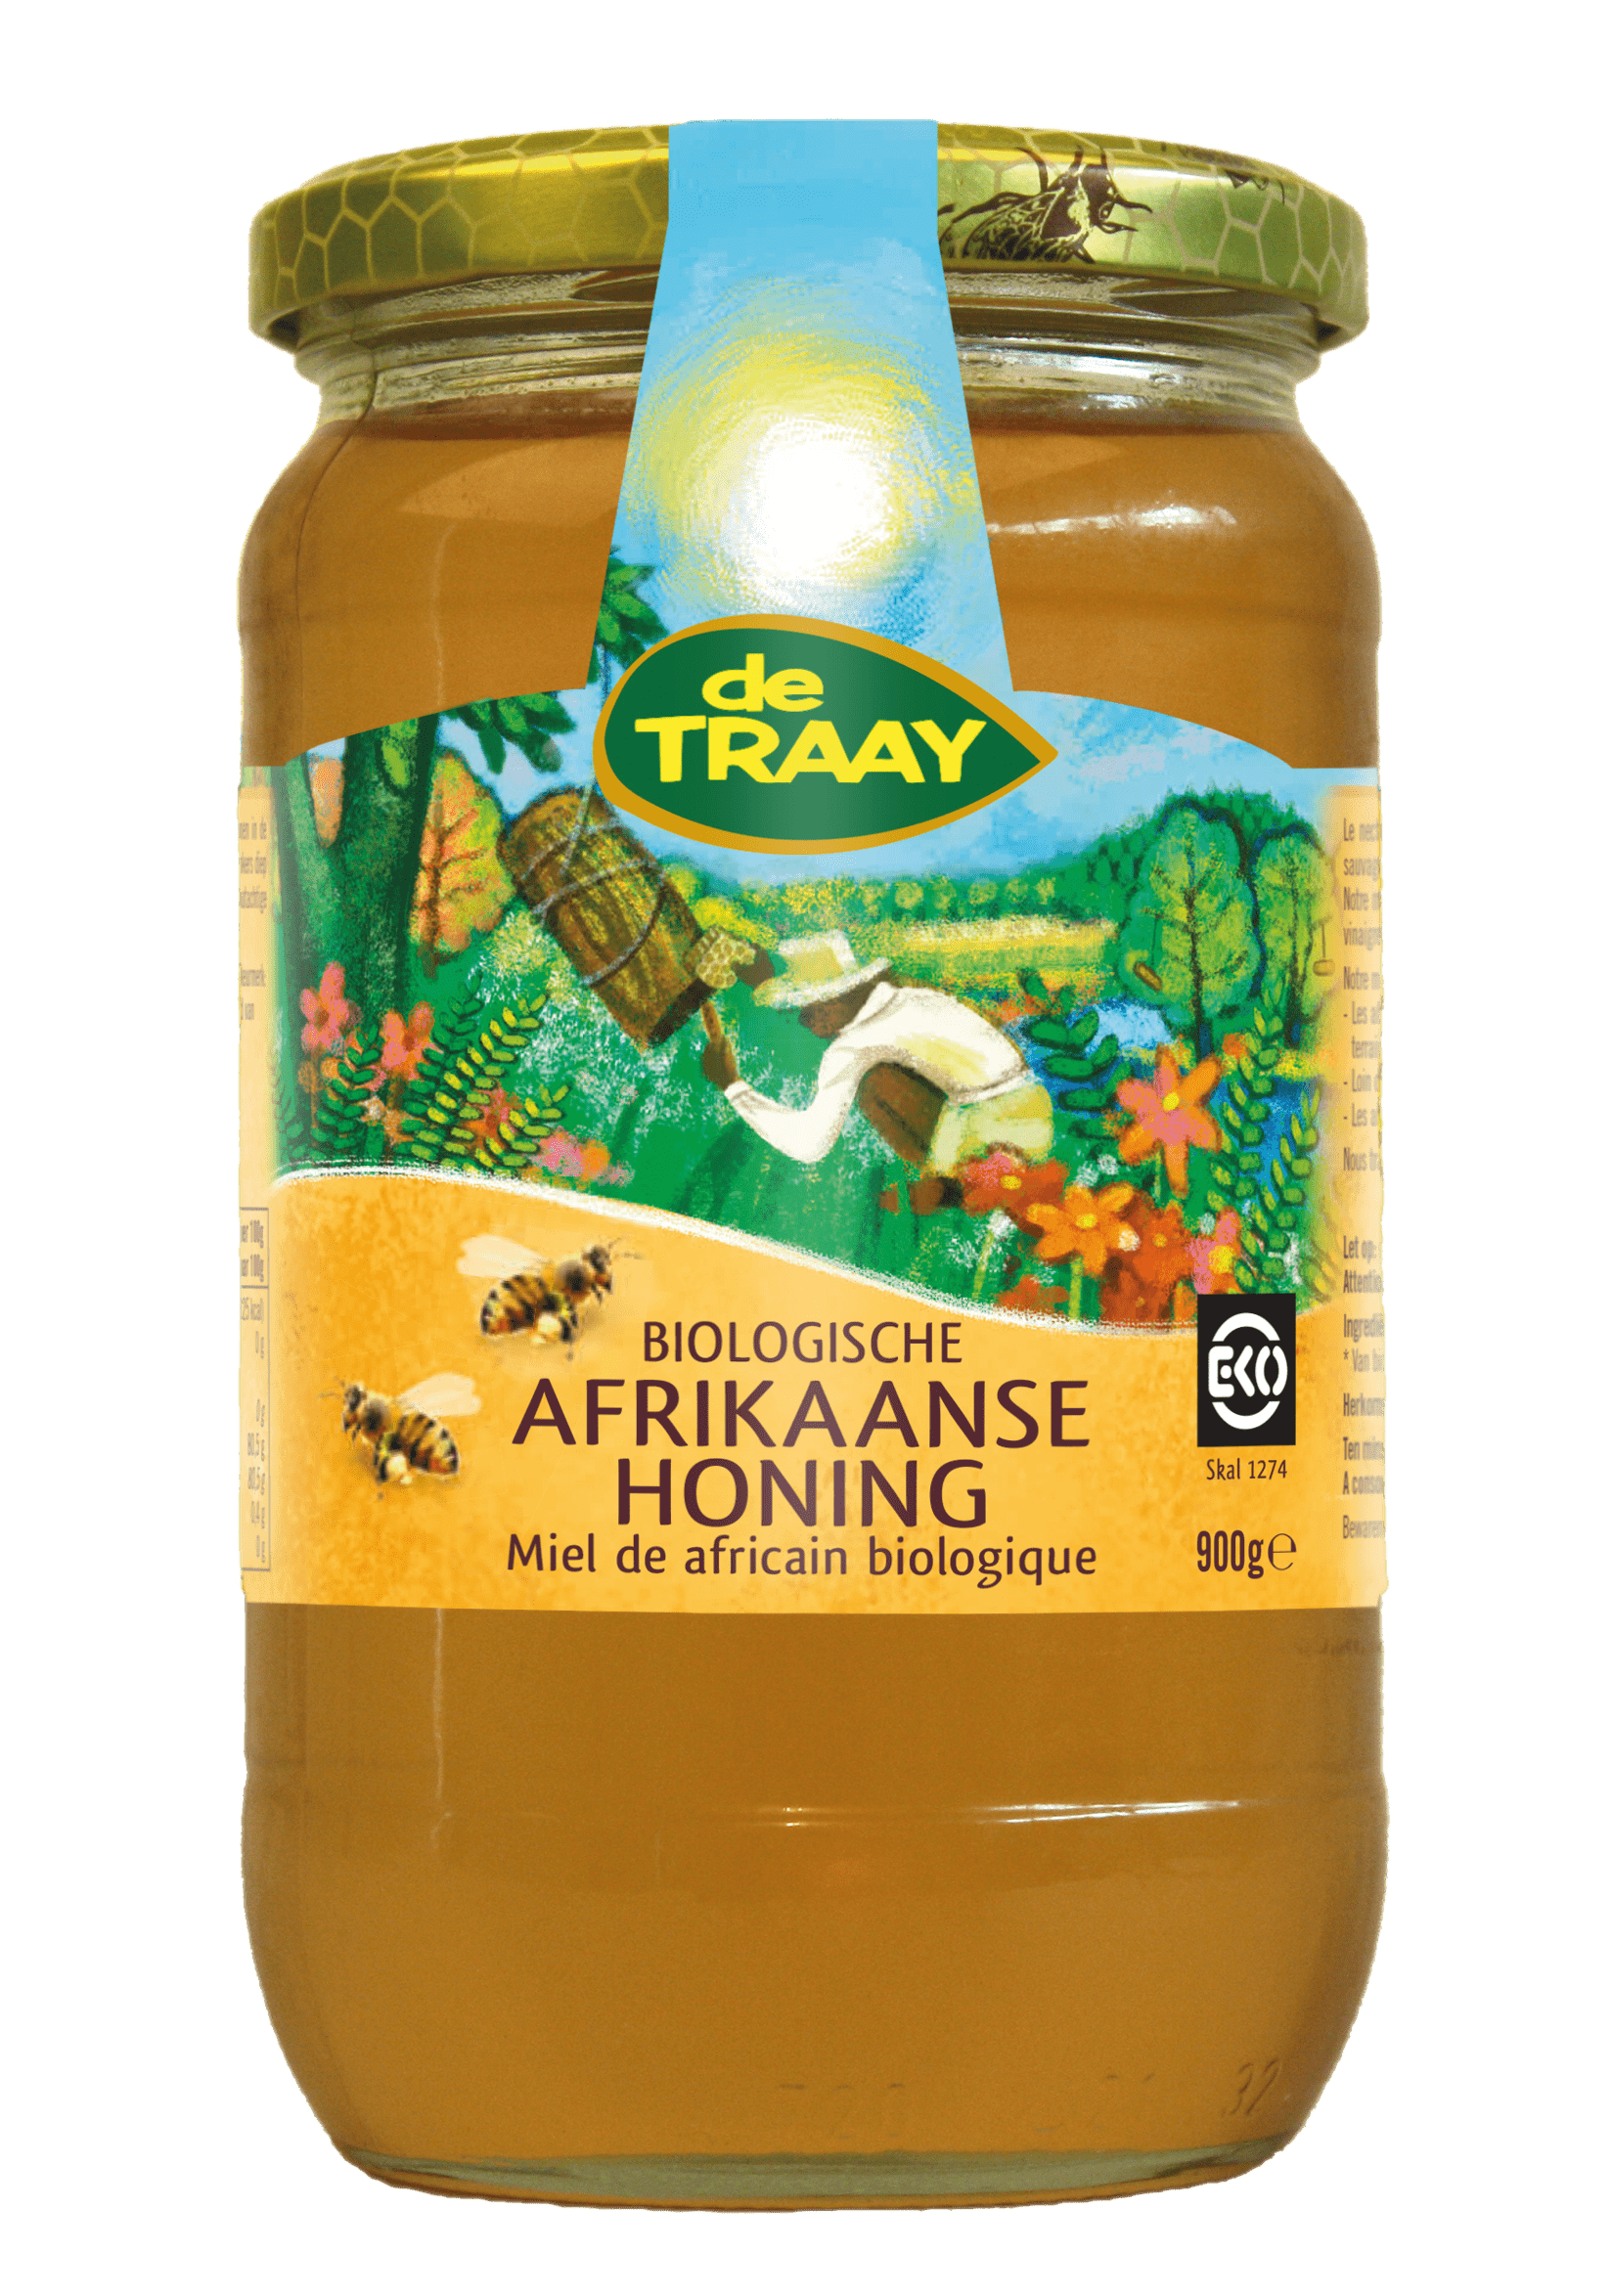 De Traay Afrikaanse honing bio 900g